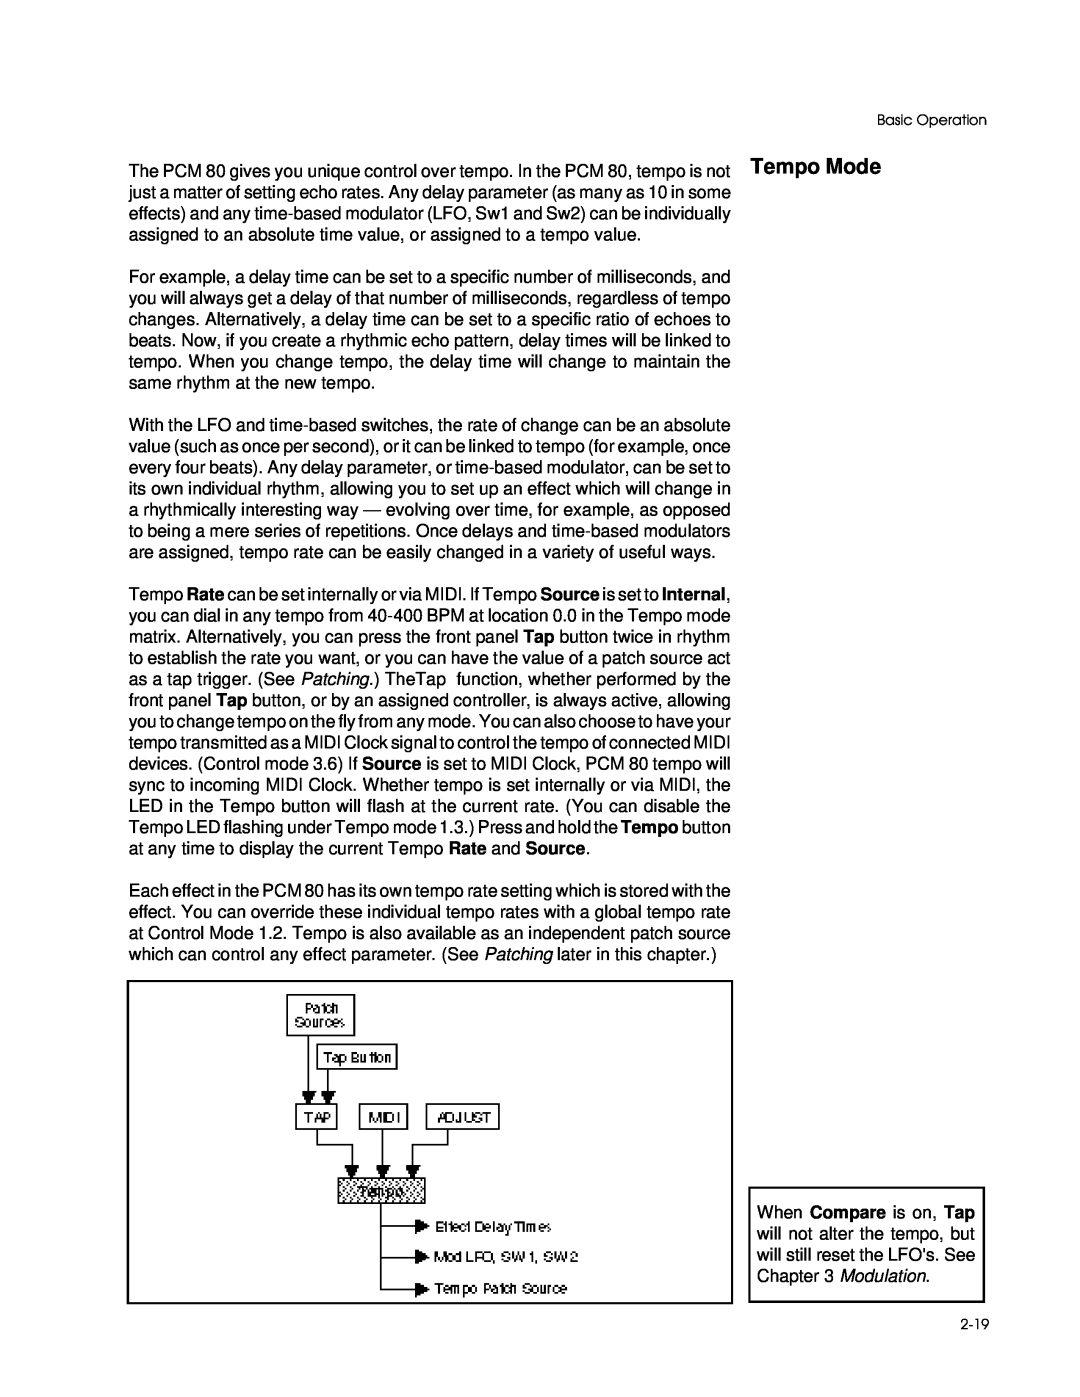 Lexicon PCM 80 manual Tempo Mode, Basic Operation, 2-19 